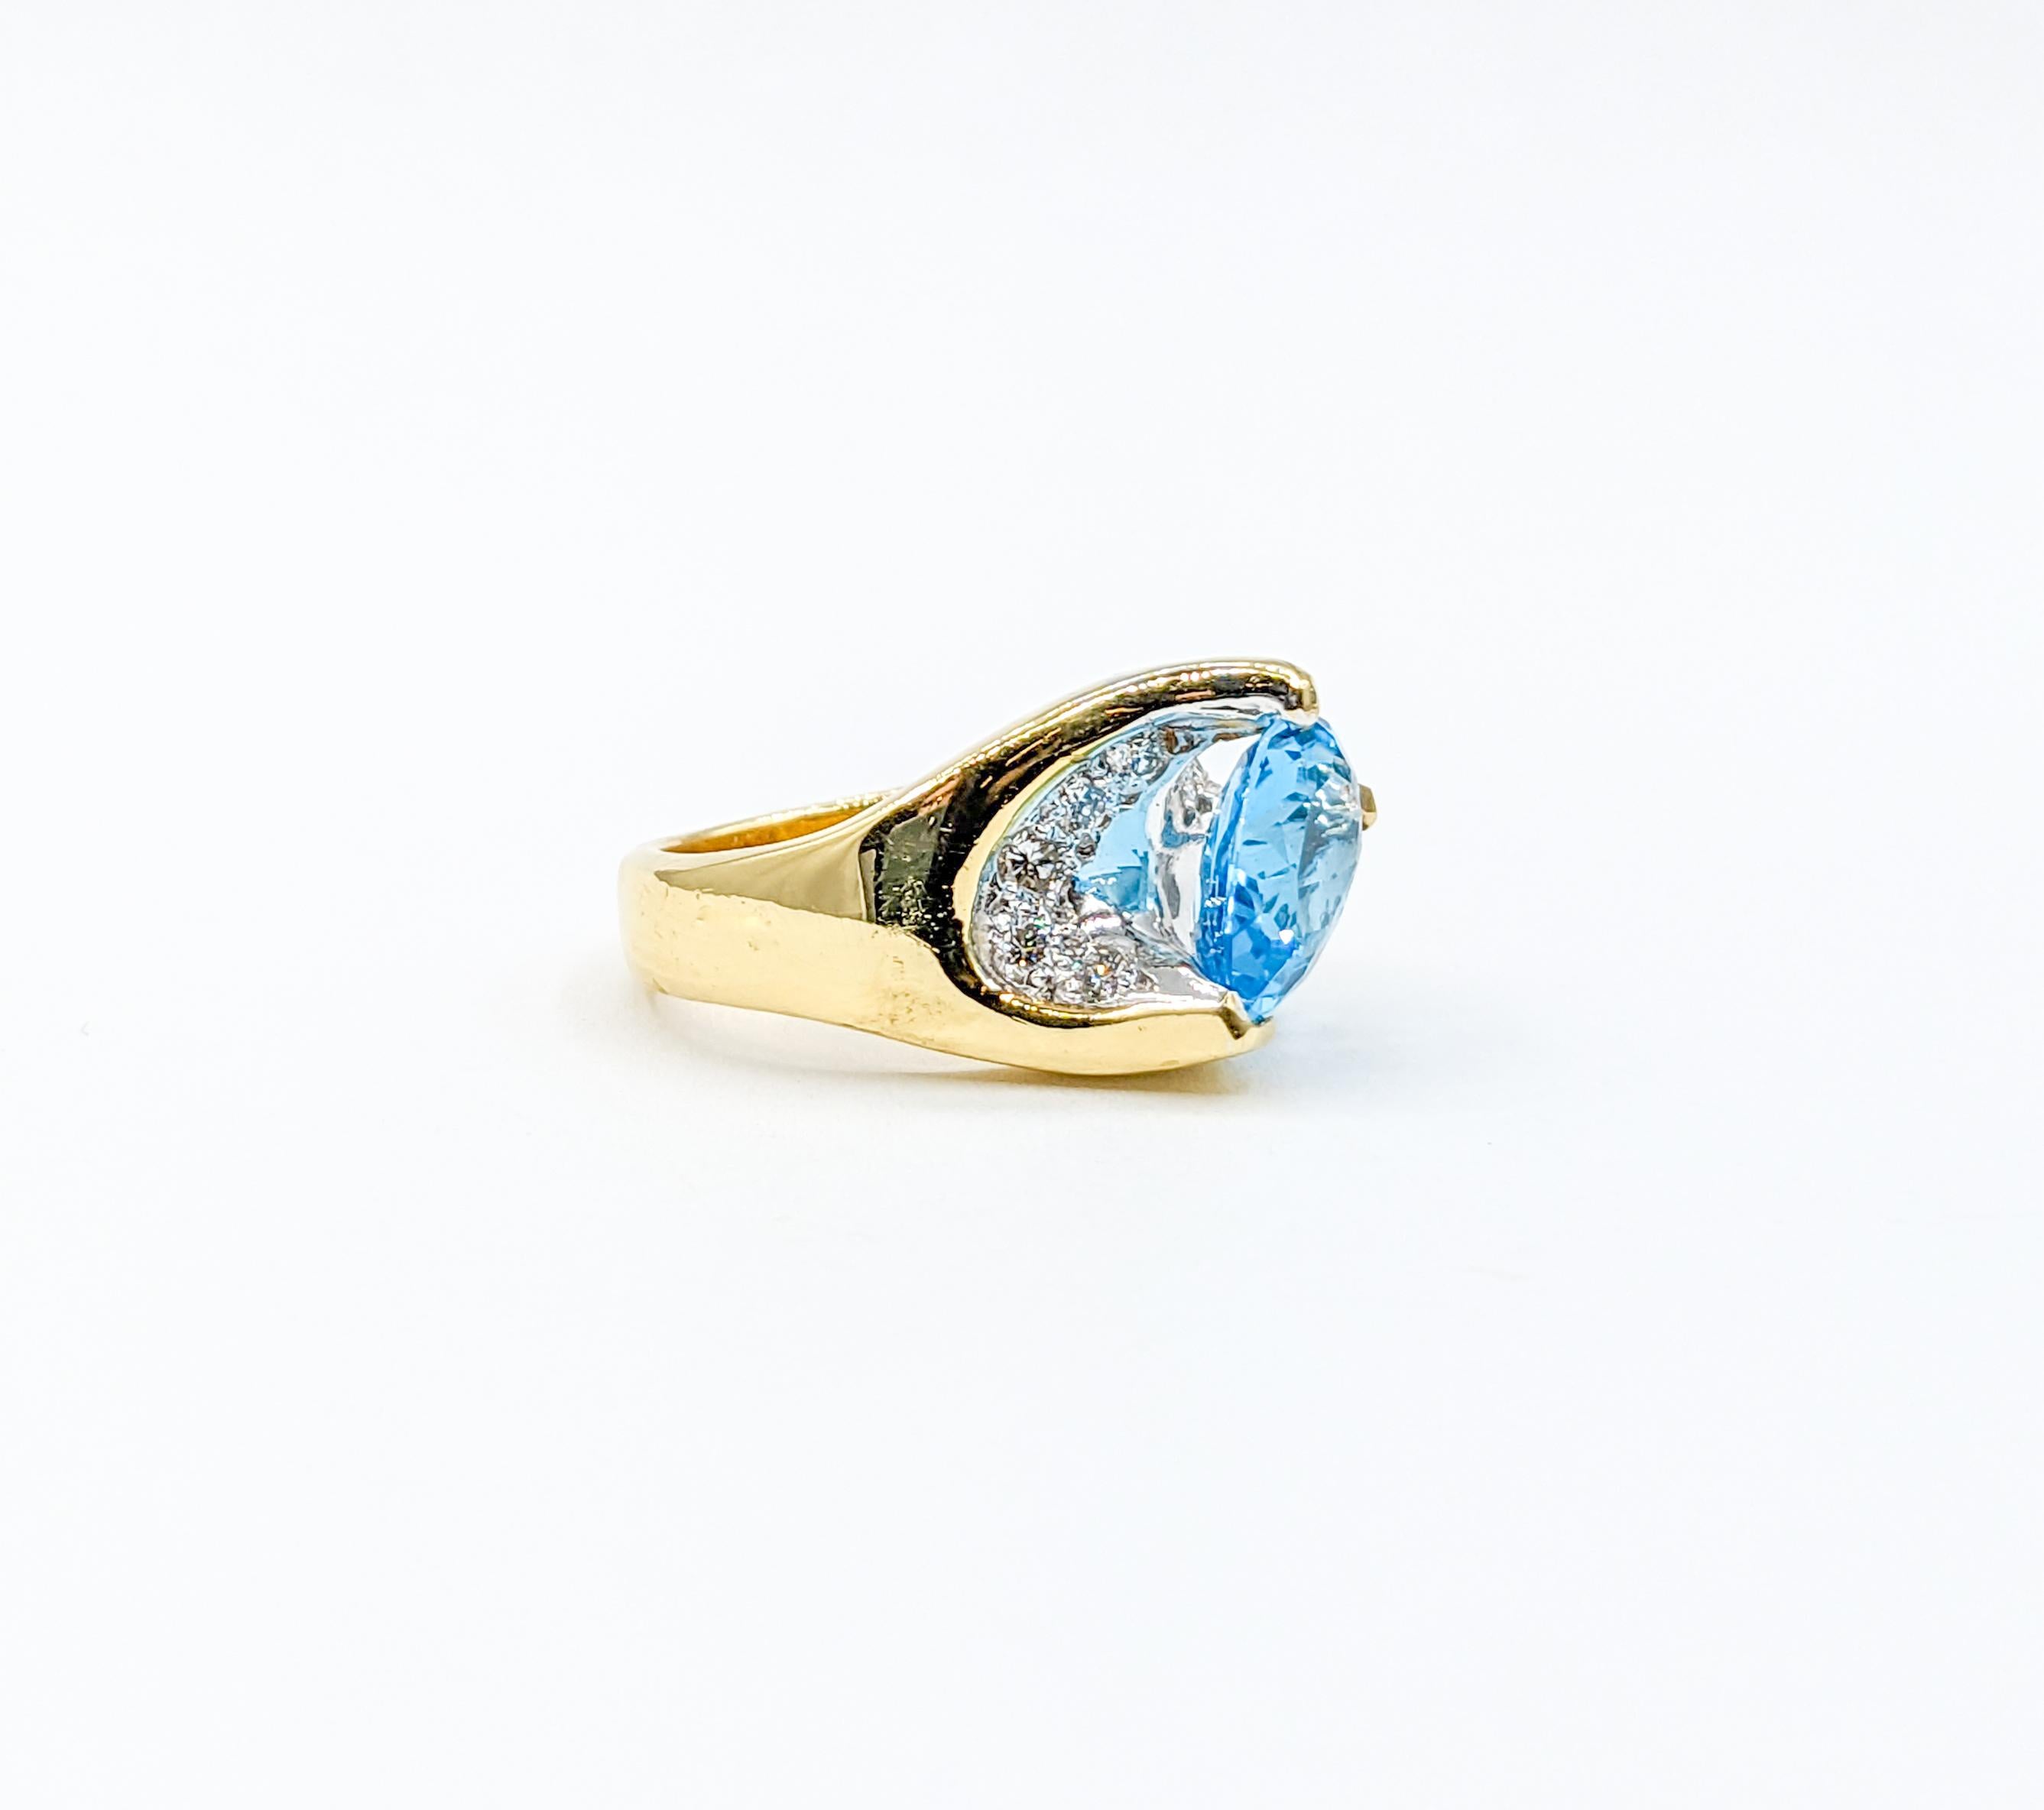 Artistic Blue Topaz & Diamond Cocktail Ring in 18k Gold For Sale 5